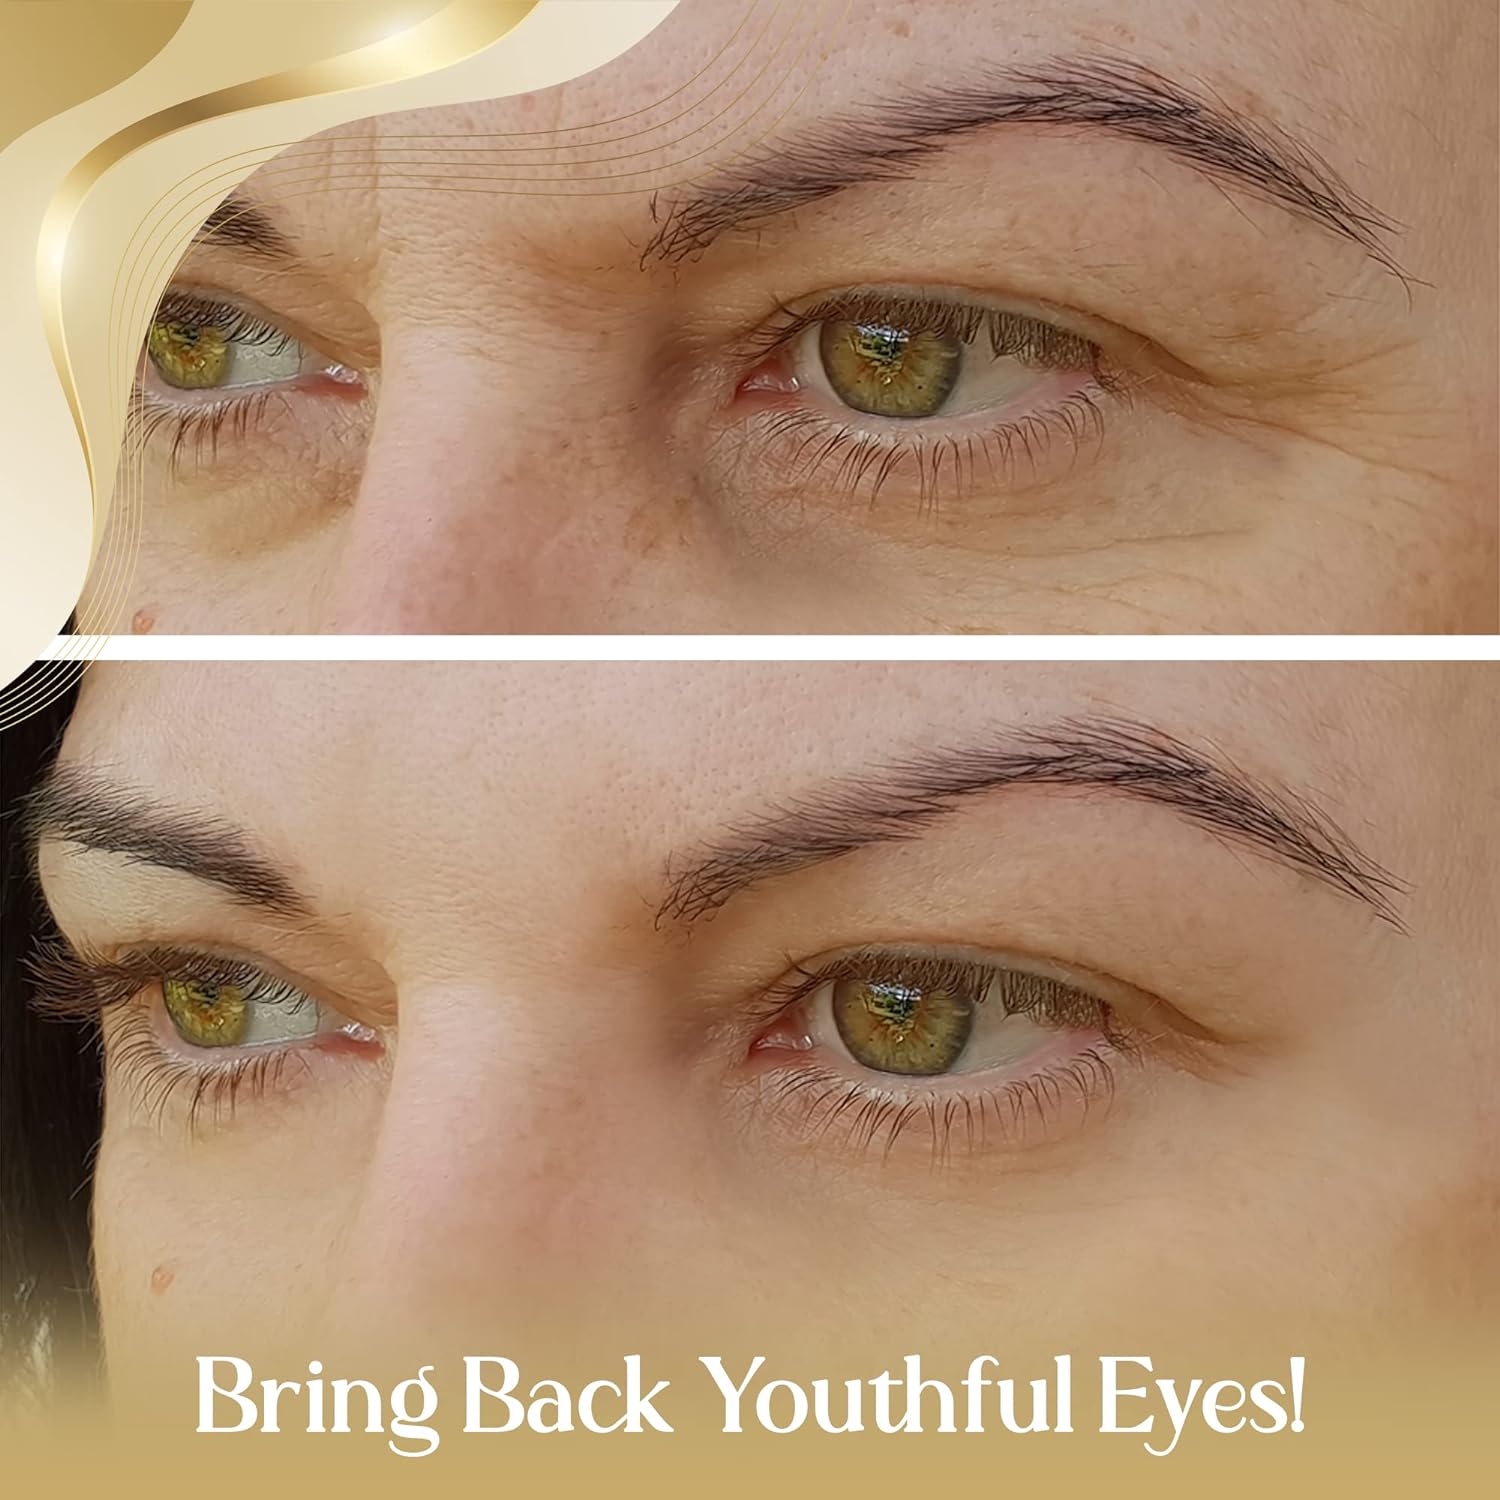 Orogold 24K Intensive Eye Serum for Wrinkles, Puffiness - 1.76 fl. oz